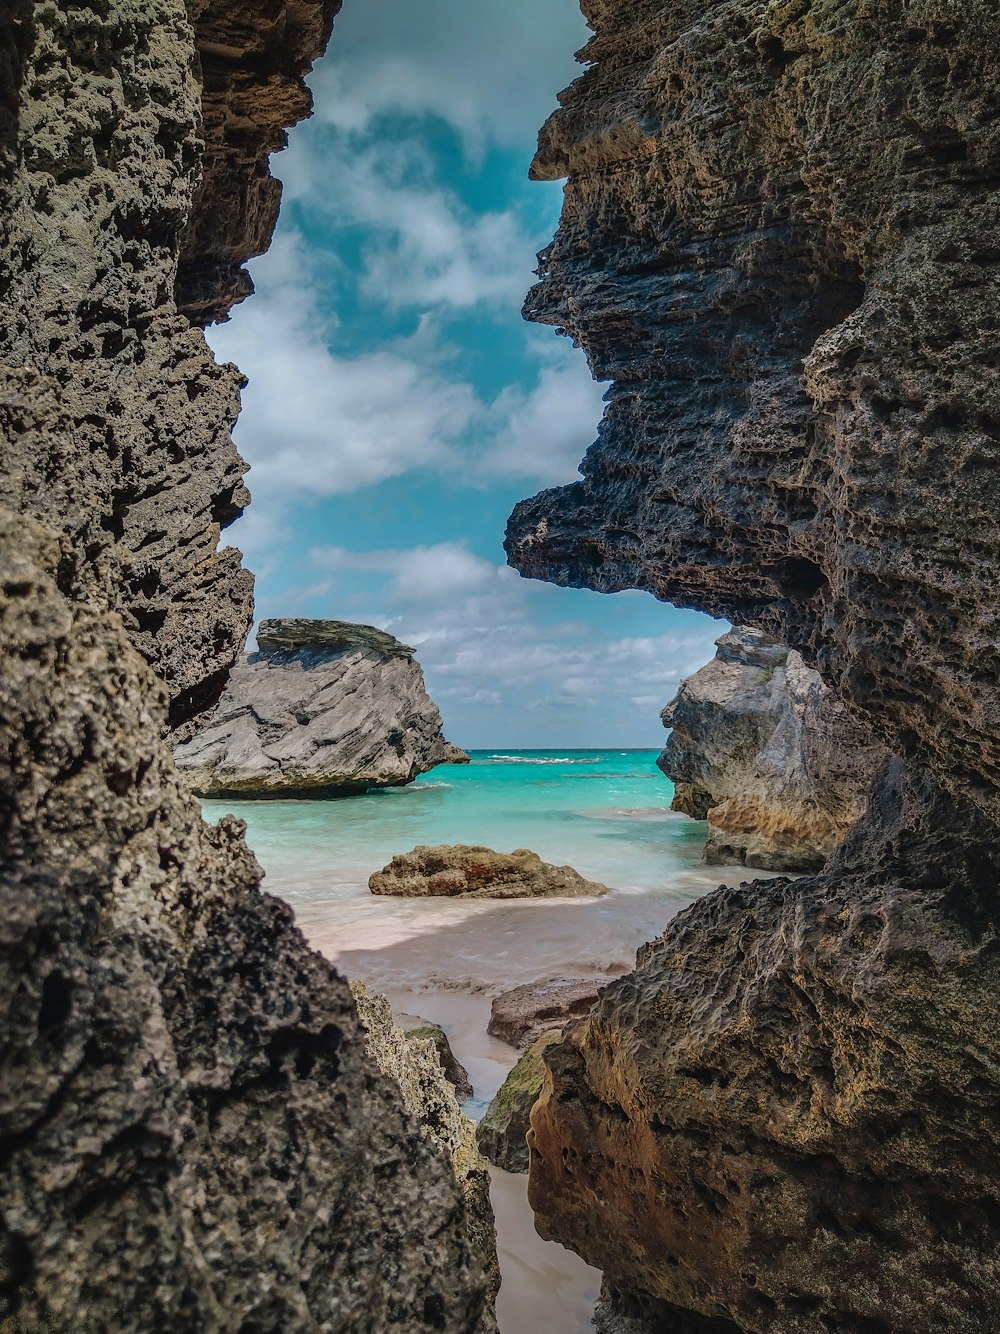 a view of the ocean through a rock arch